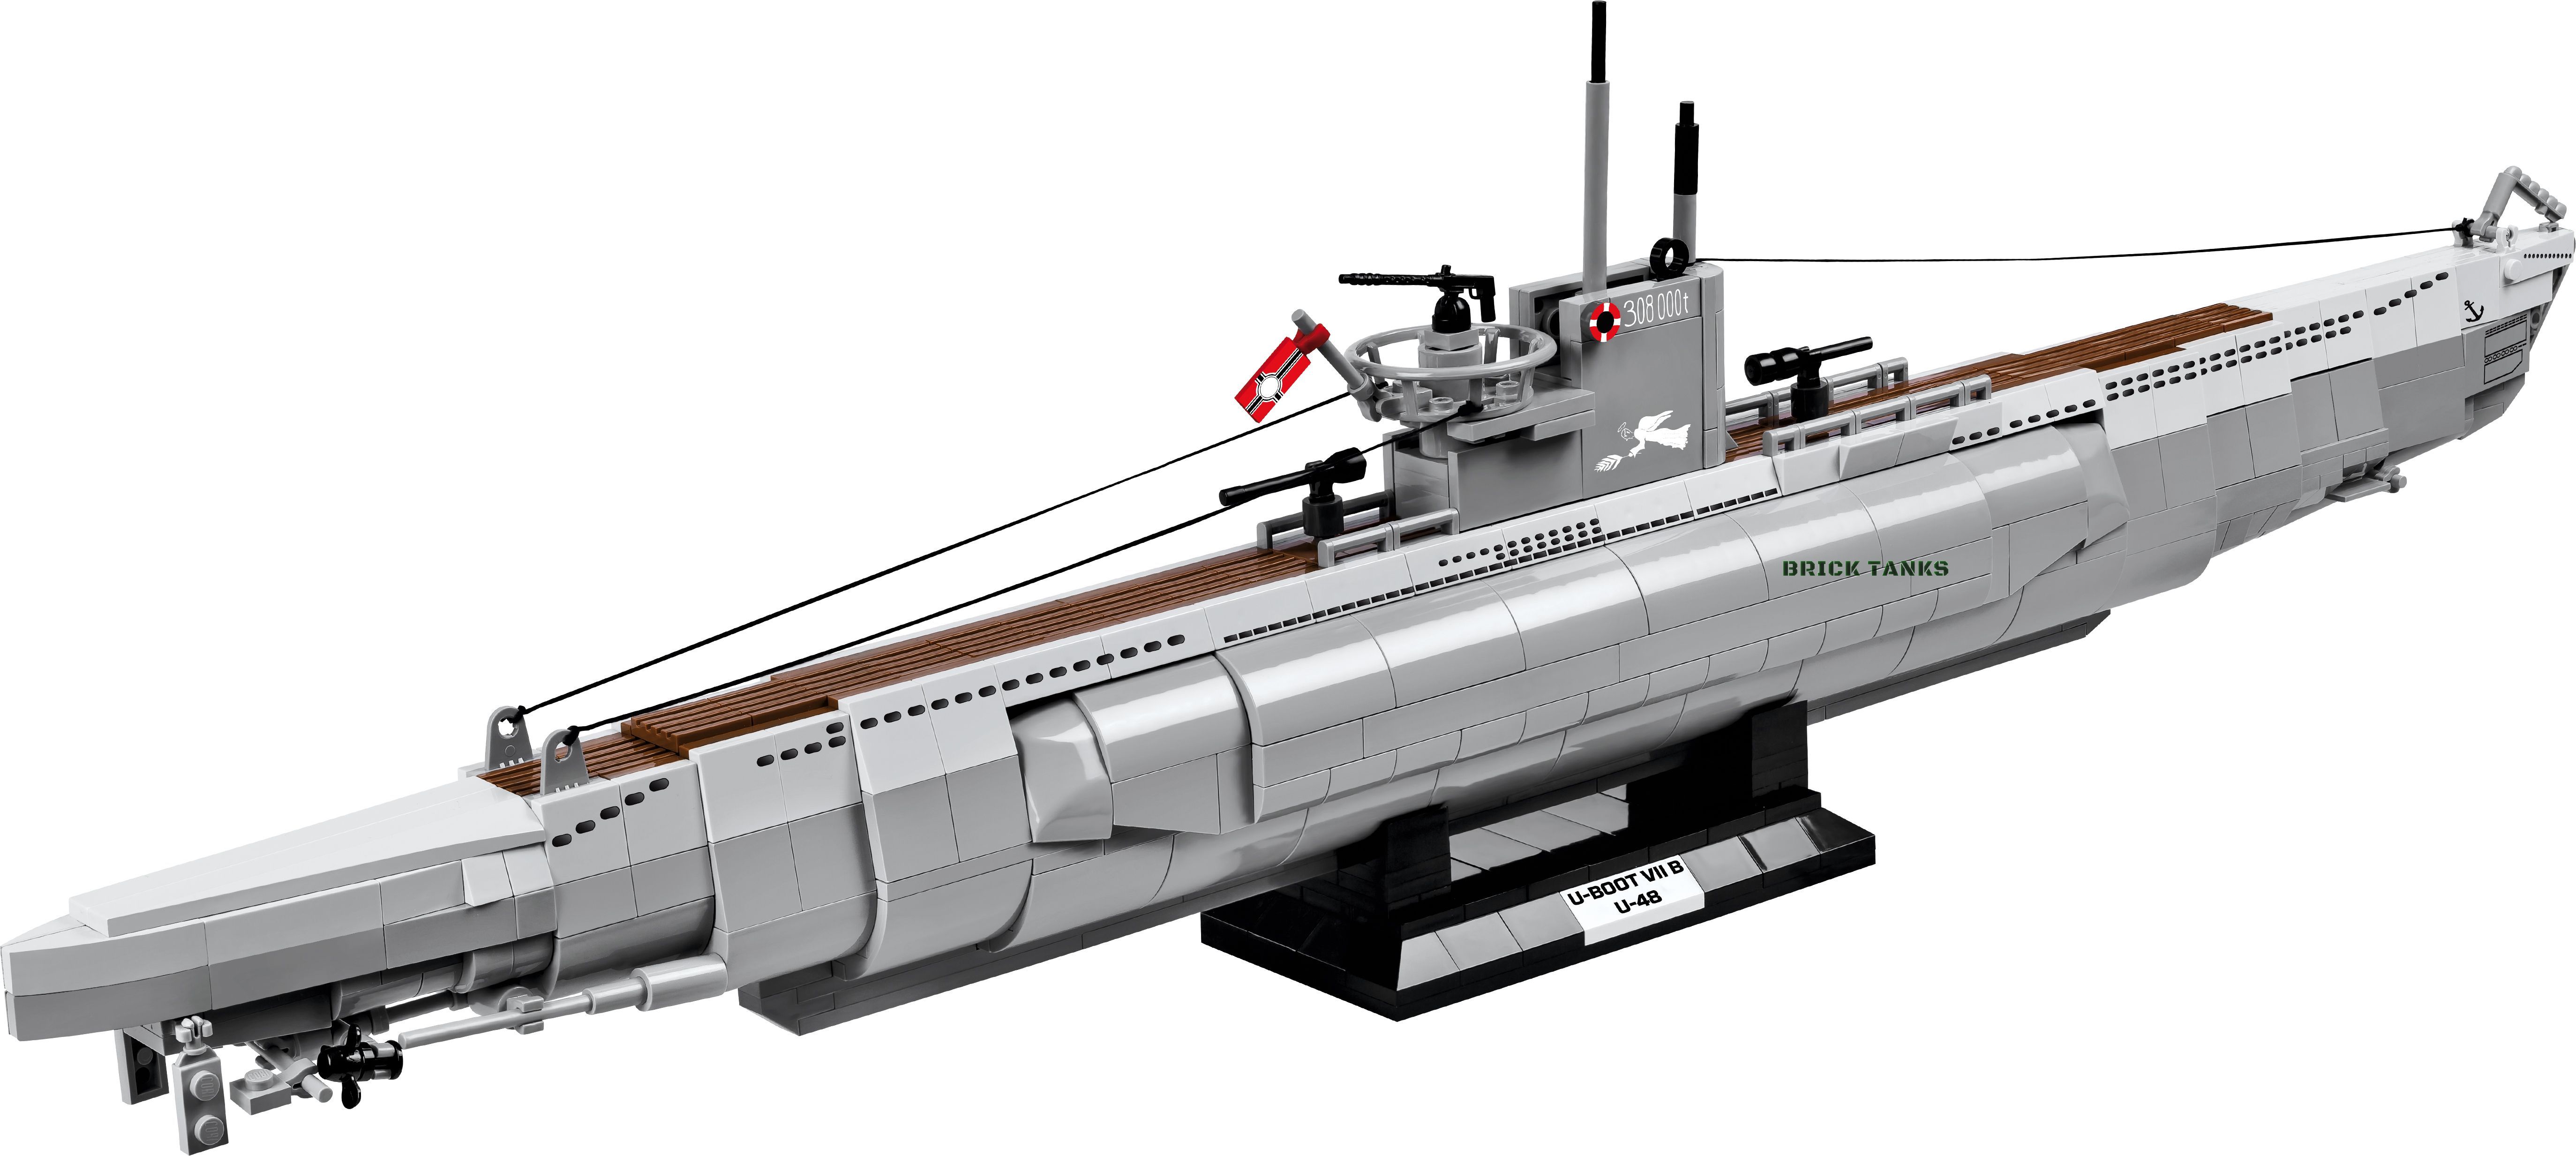 u-boot-viib-u-48-lego-compatible-cobi-4805-800-brick-submarine-ship-cobi-284671.jpg